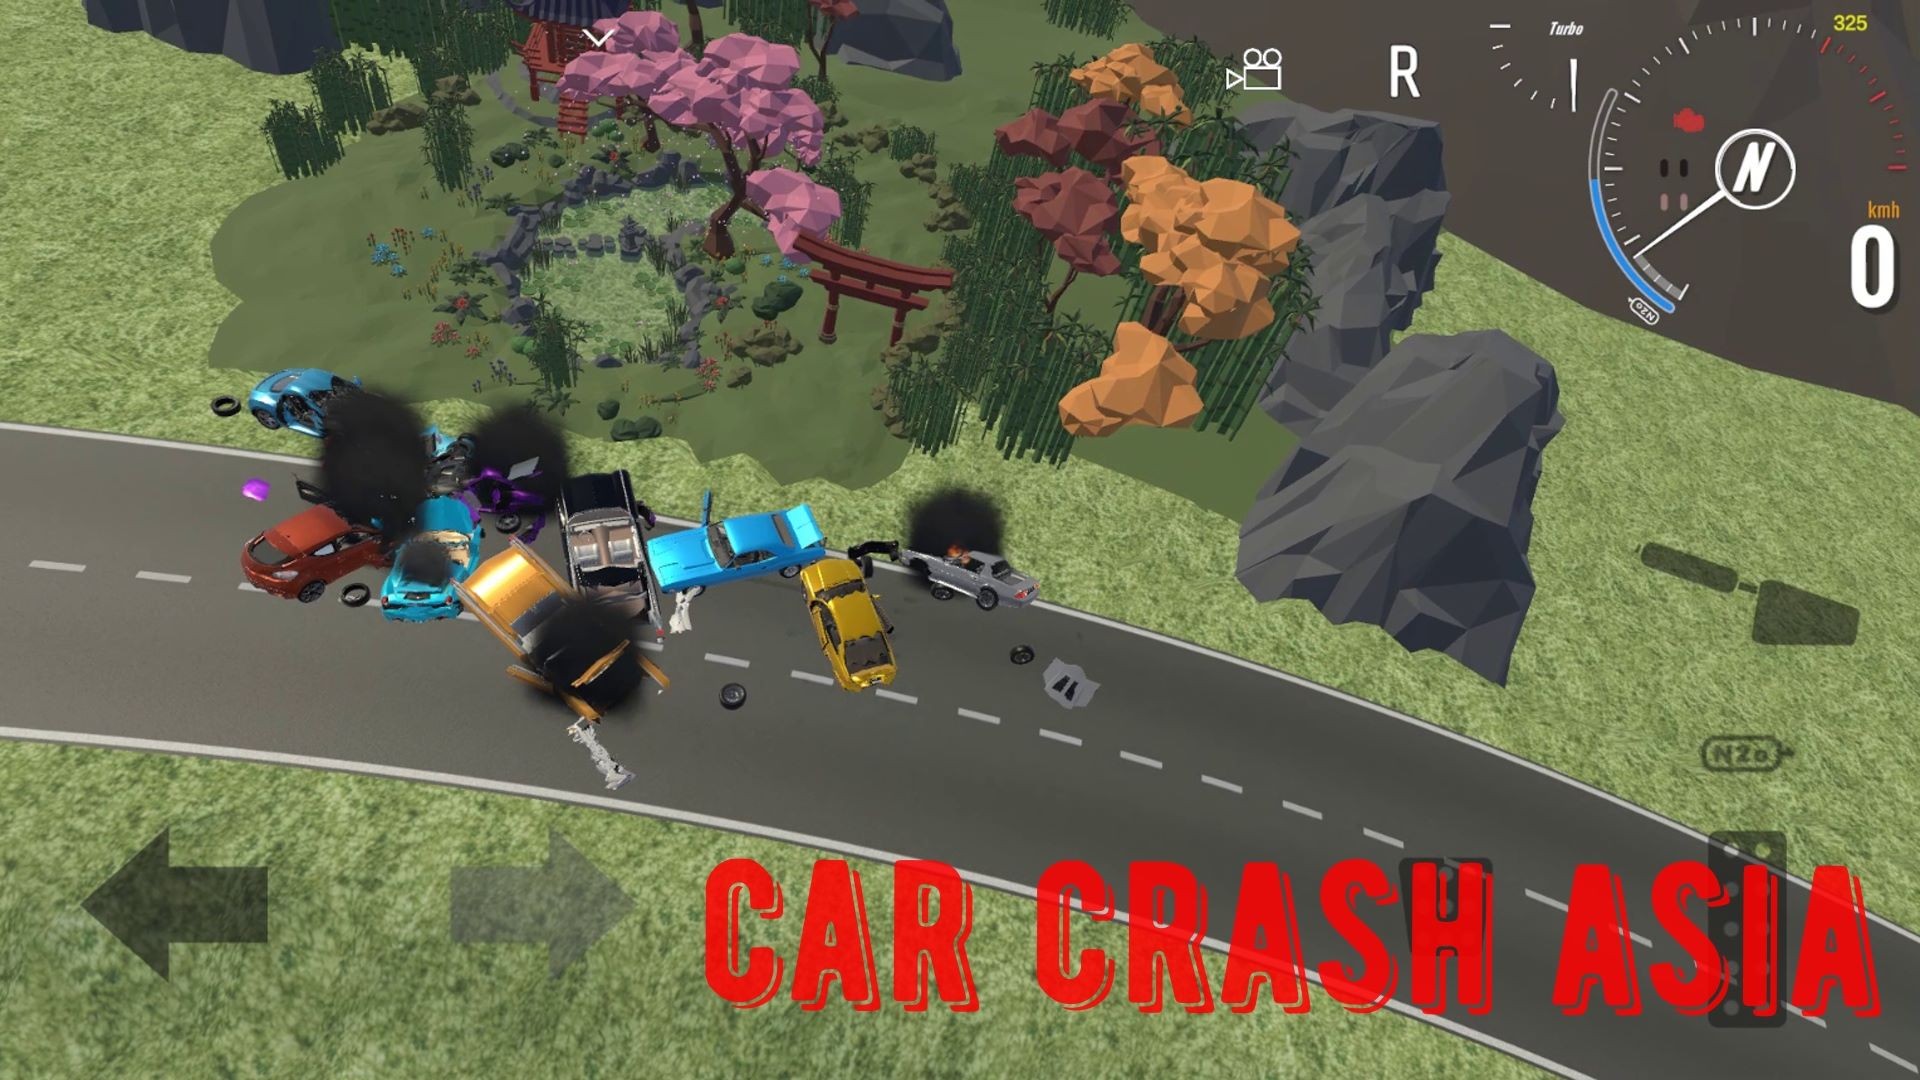 Car Crash Asia - Microsoft Apps